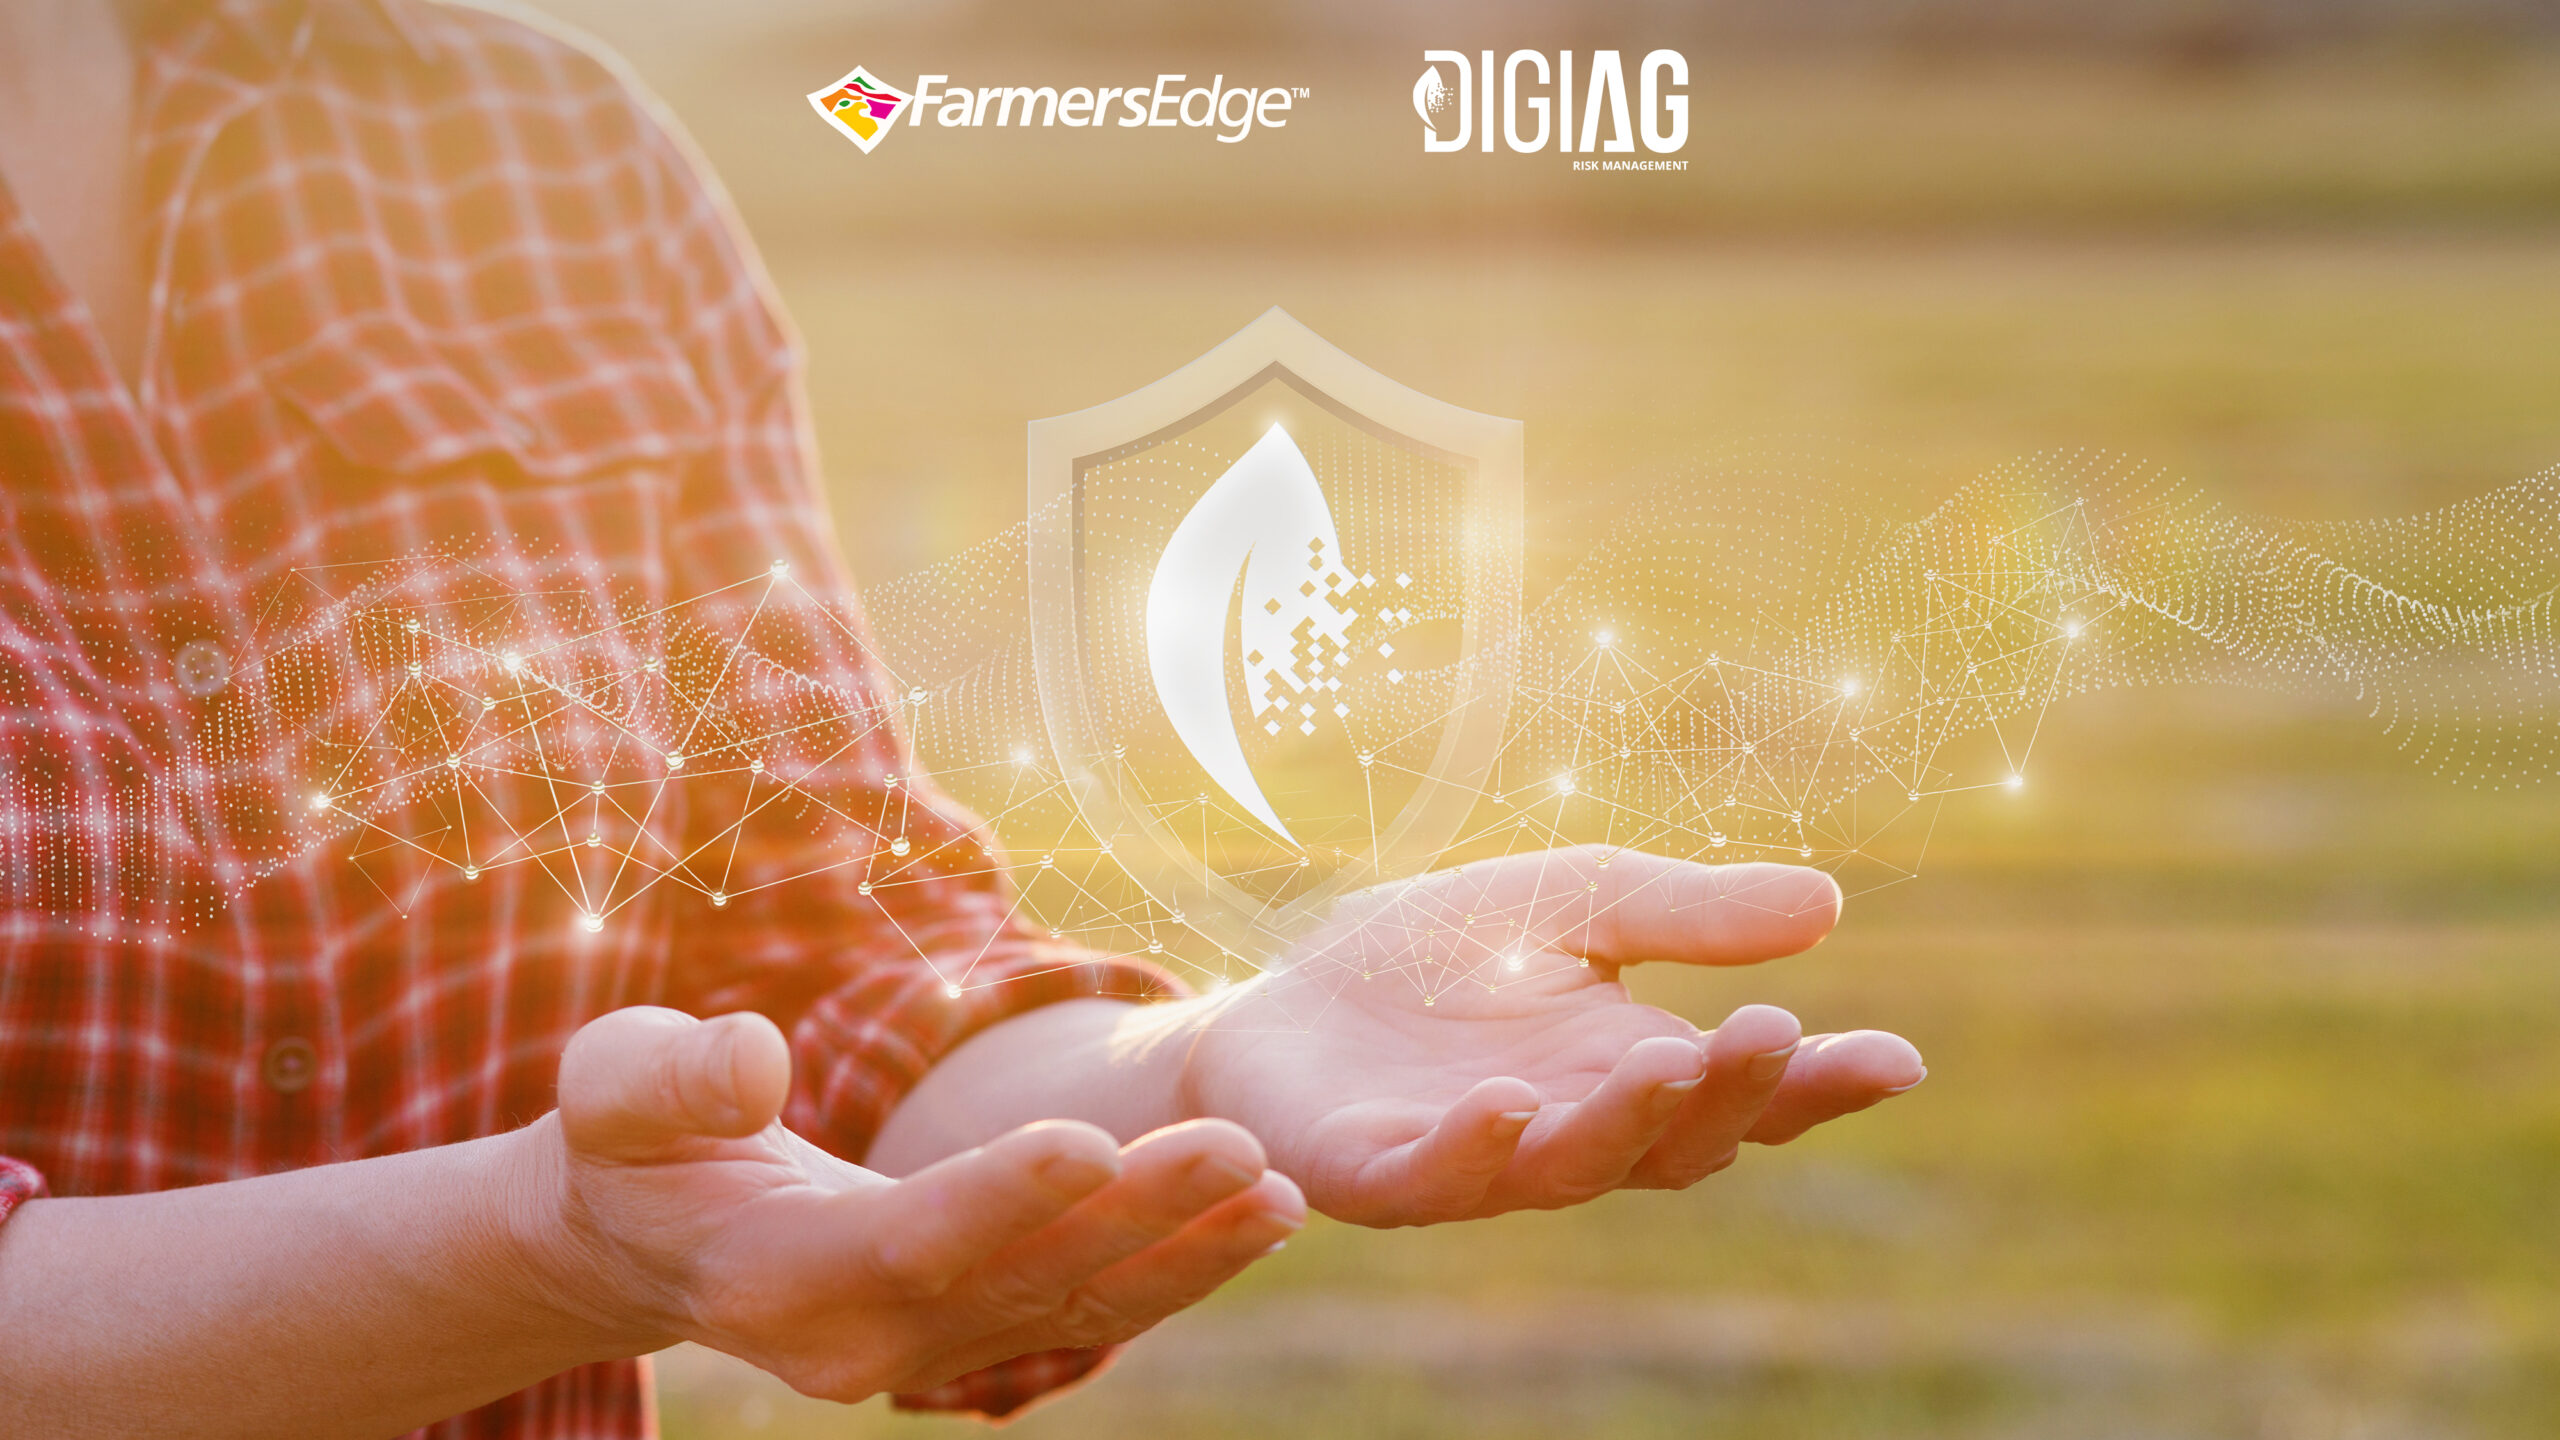 Farmers Edge Inc. Announces Establishment of DigiAg Risk Management Subsidiary